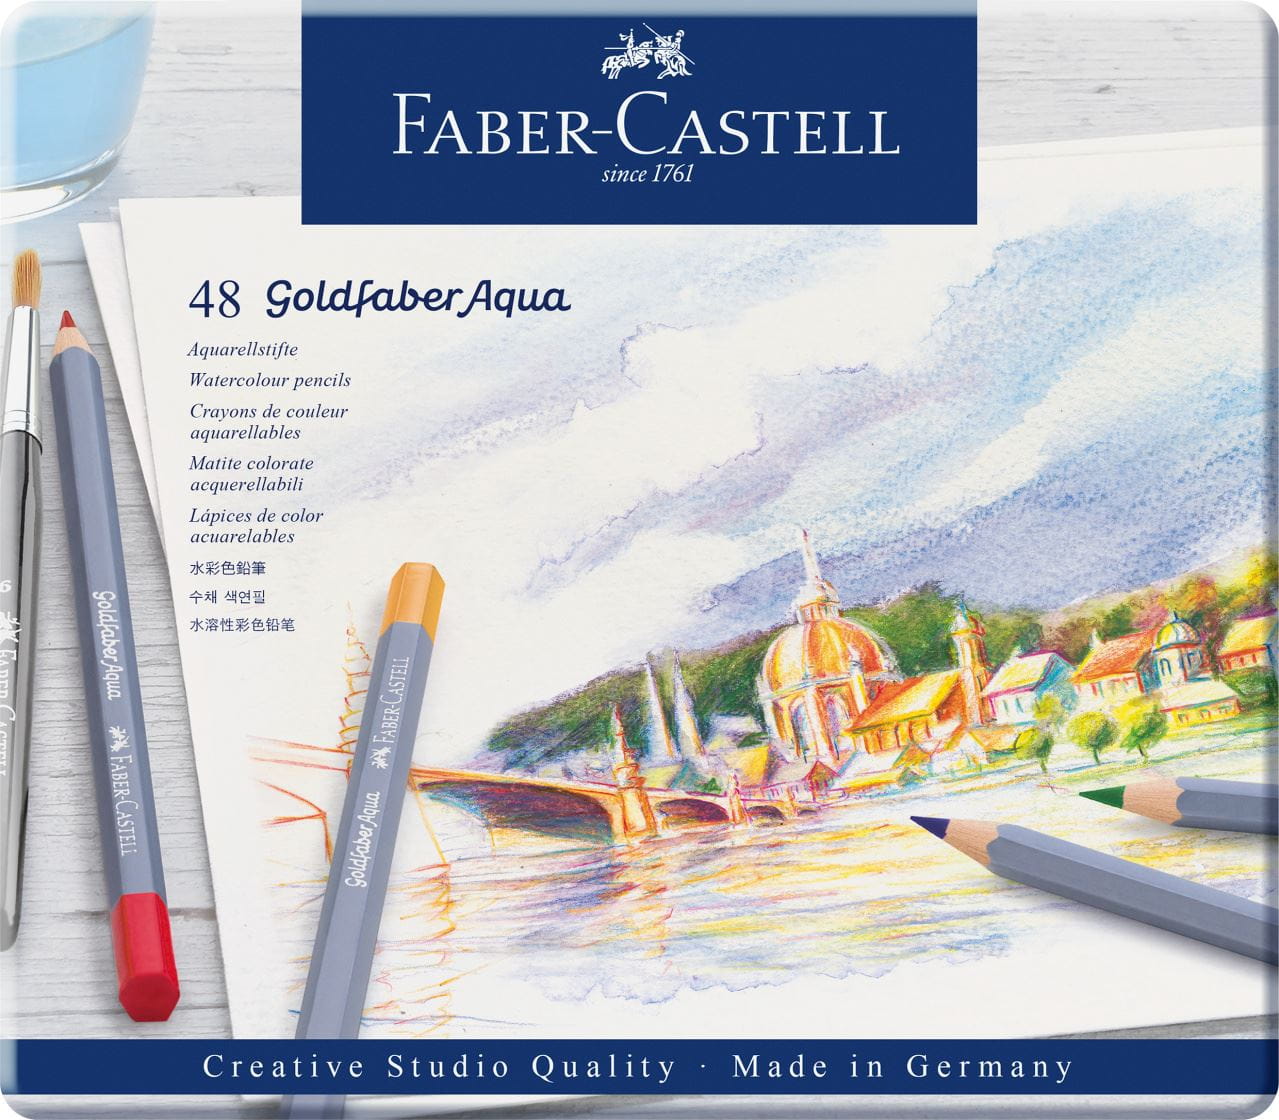 Faber-Castell - Goldfaber Aqua watercolour pencil, tin of 48